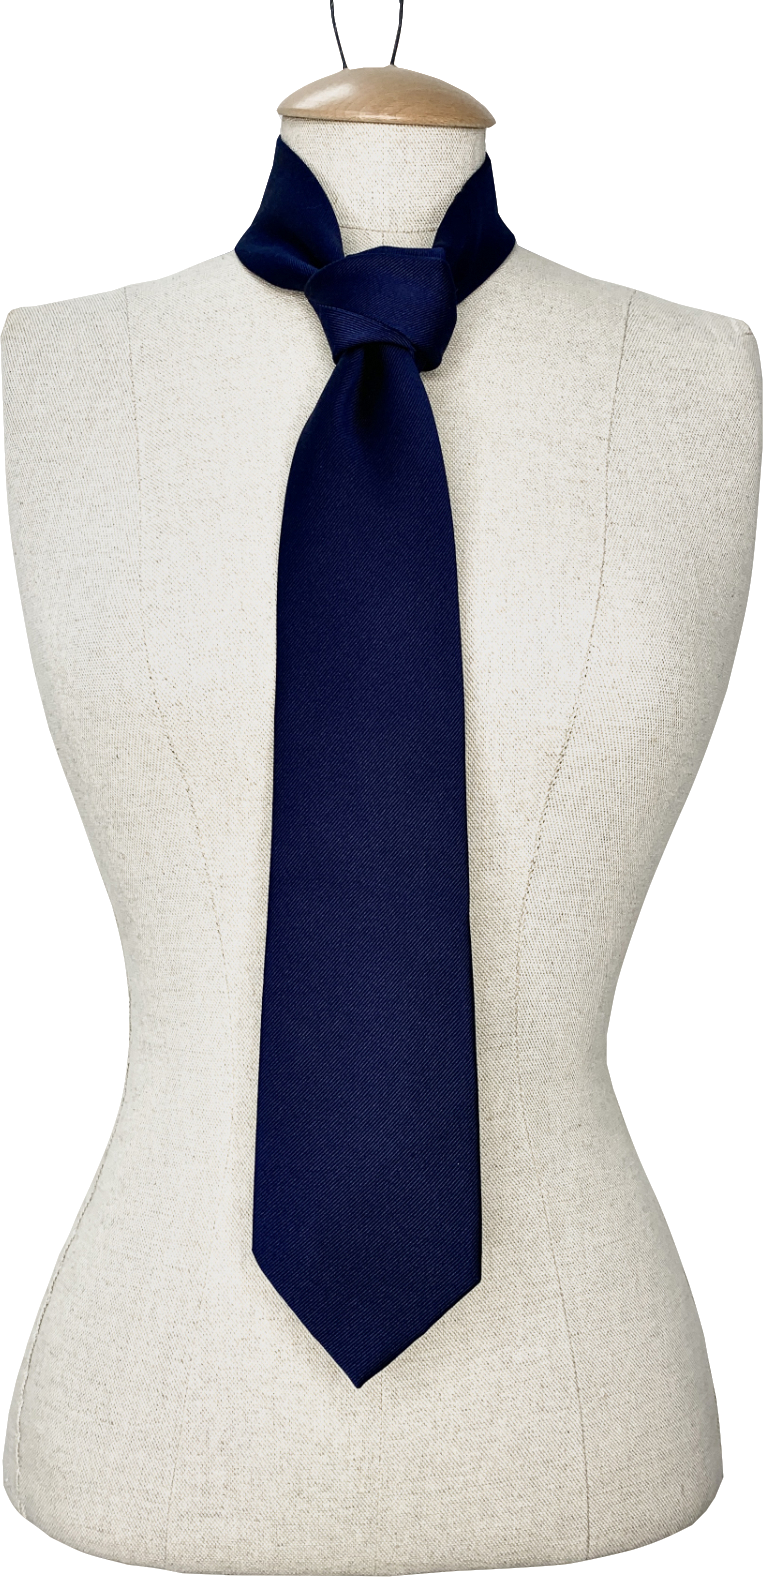 Harvie & Hudson Blue Navy Plain Wool Tie One Size